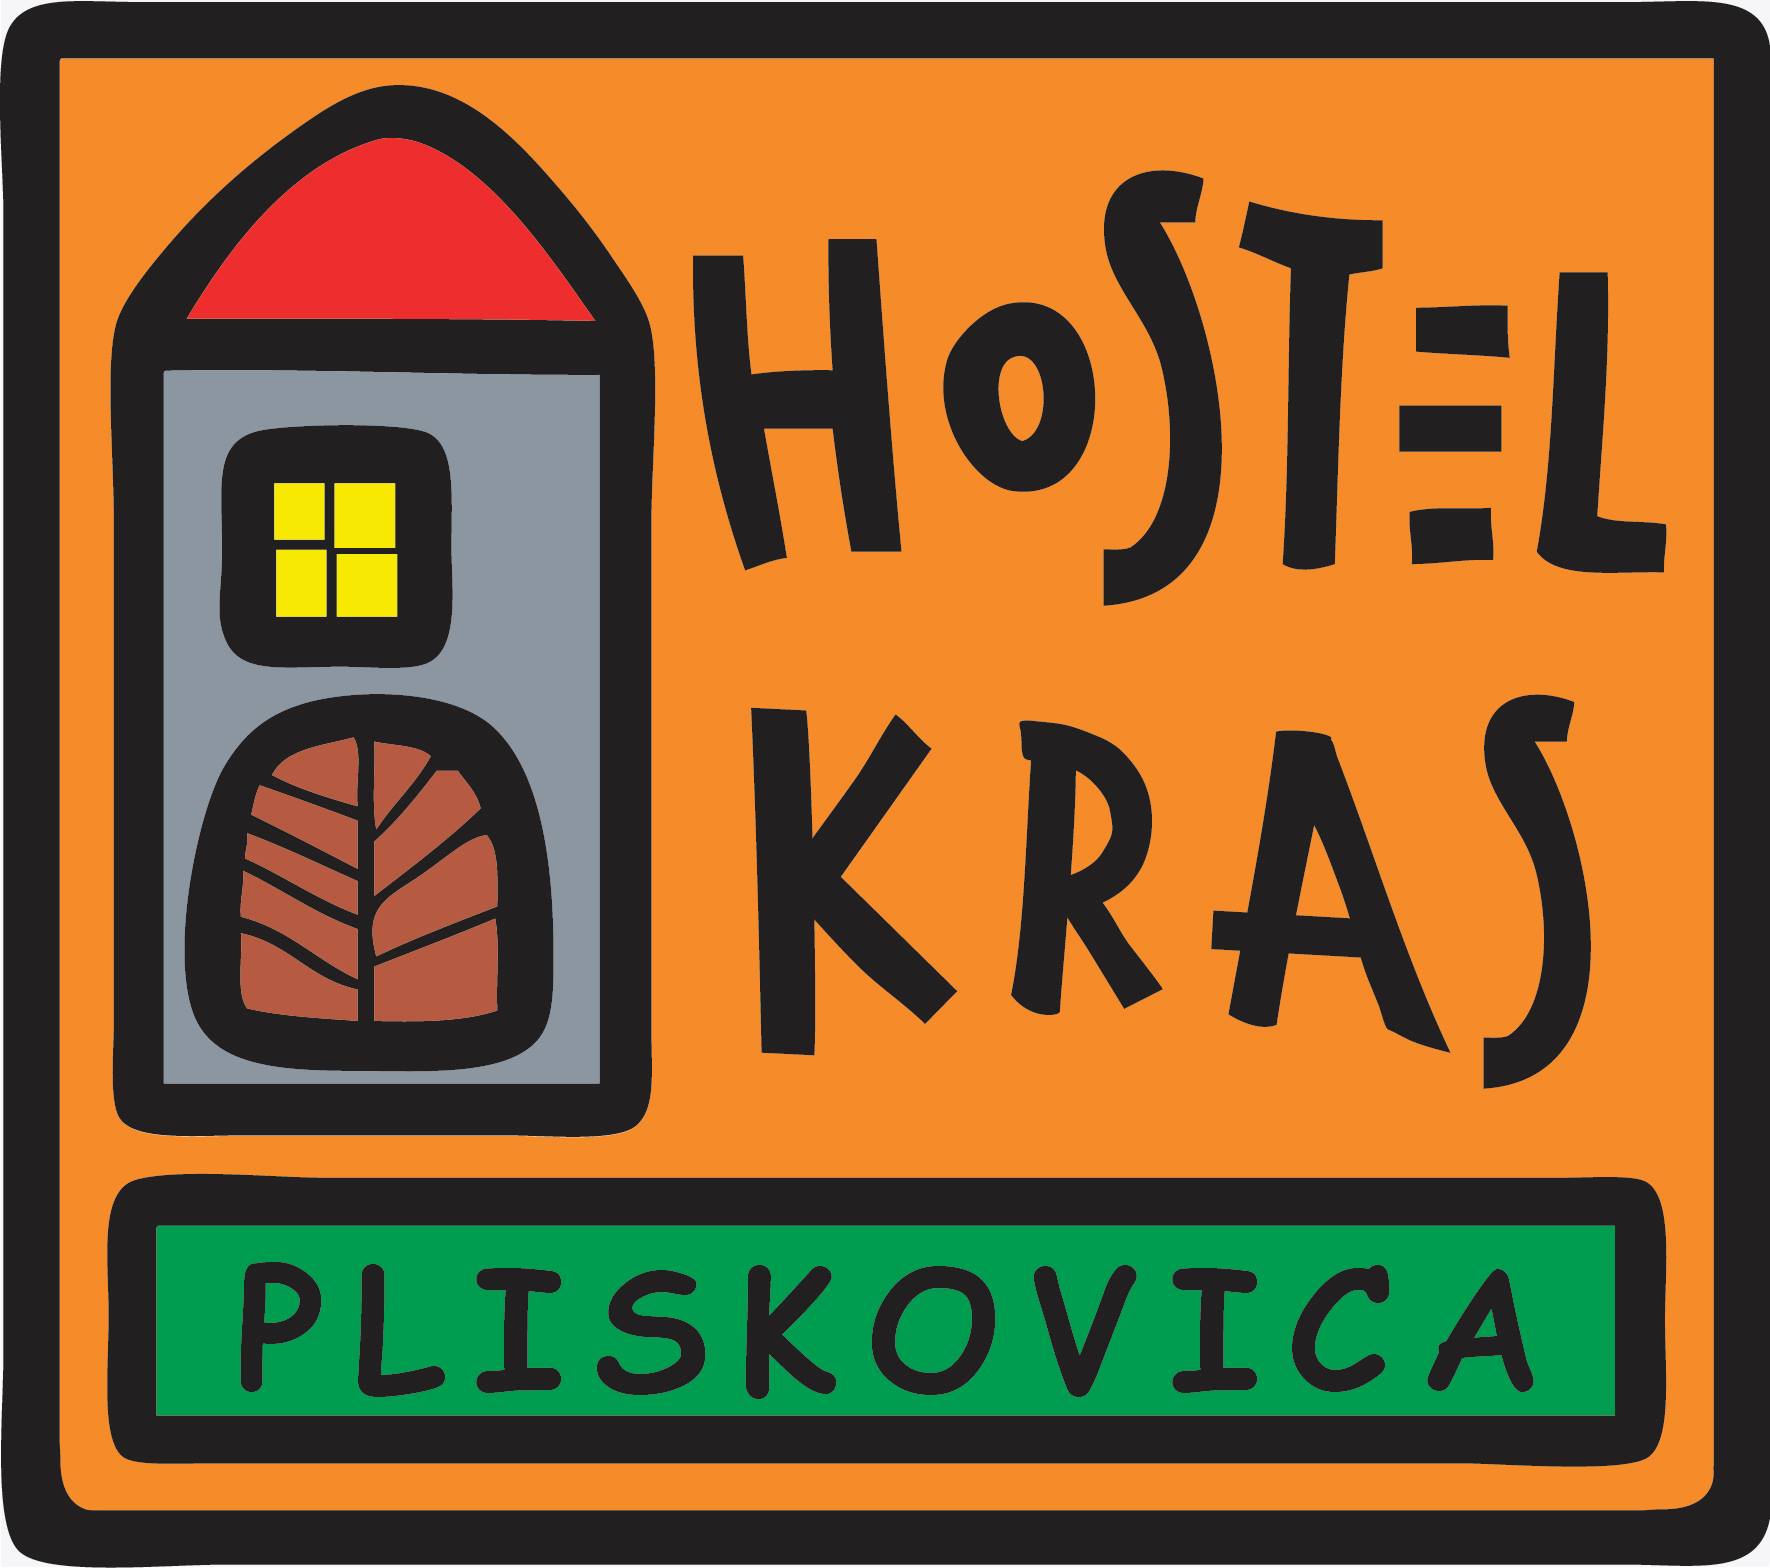 hostel kras pliskovica slovenija